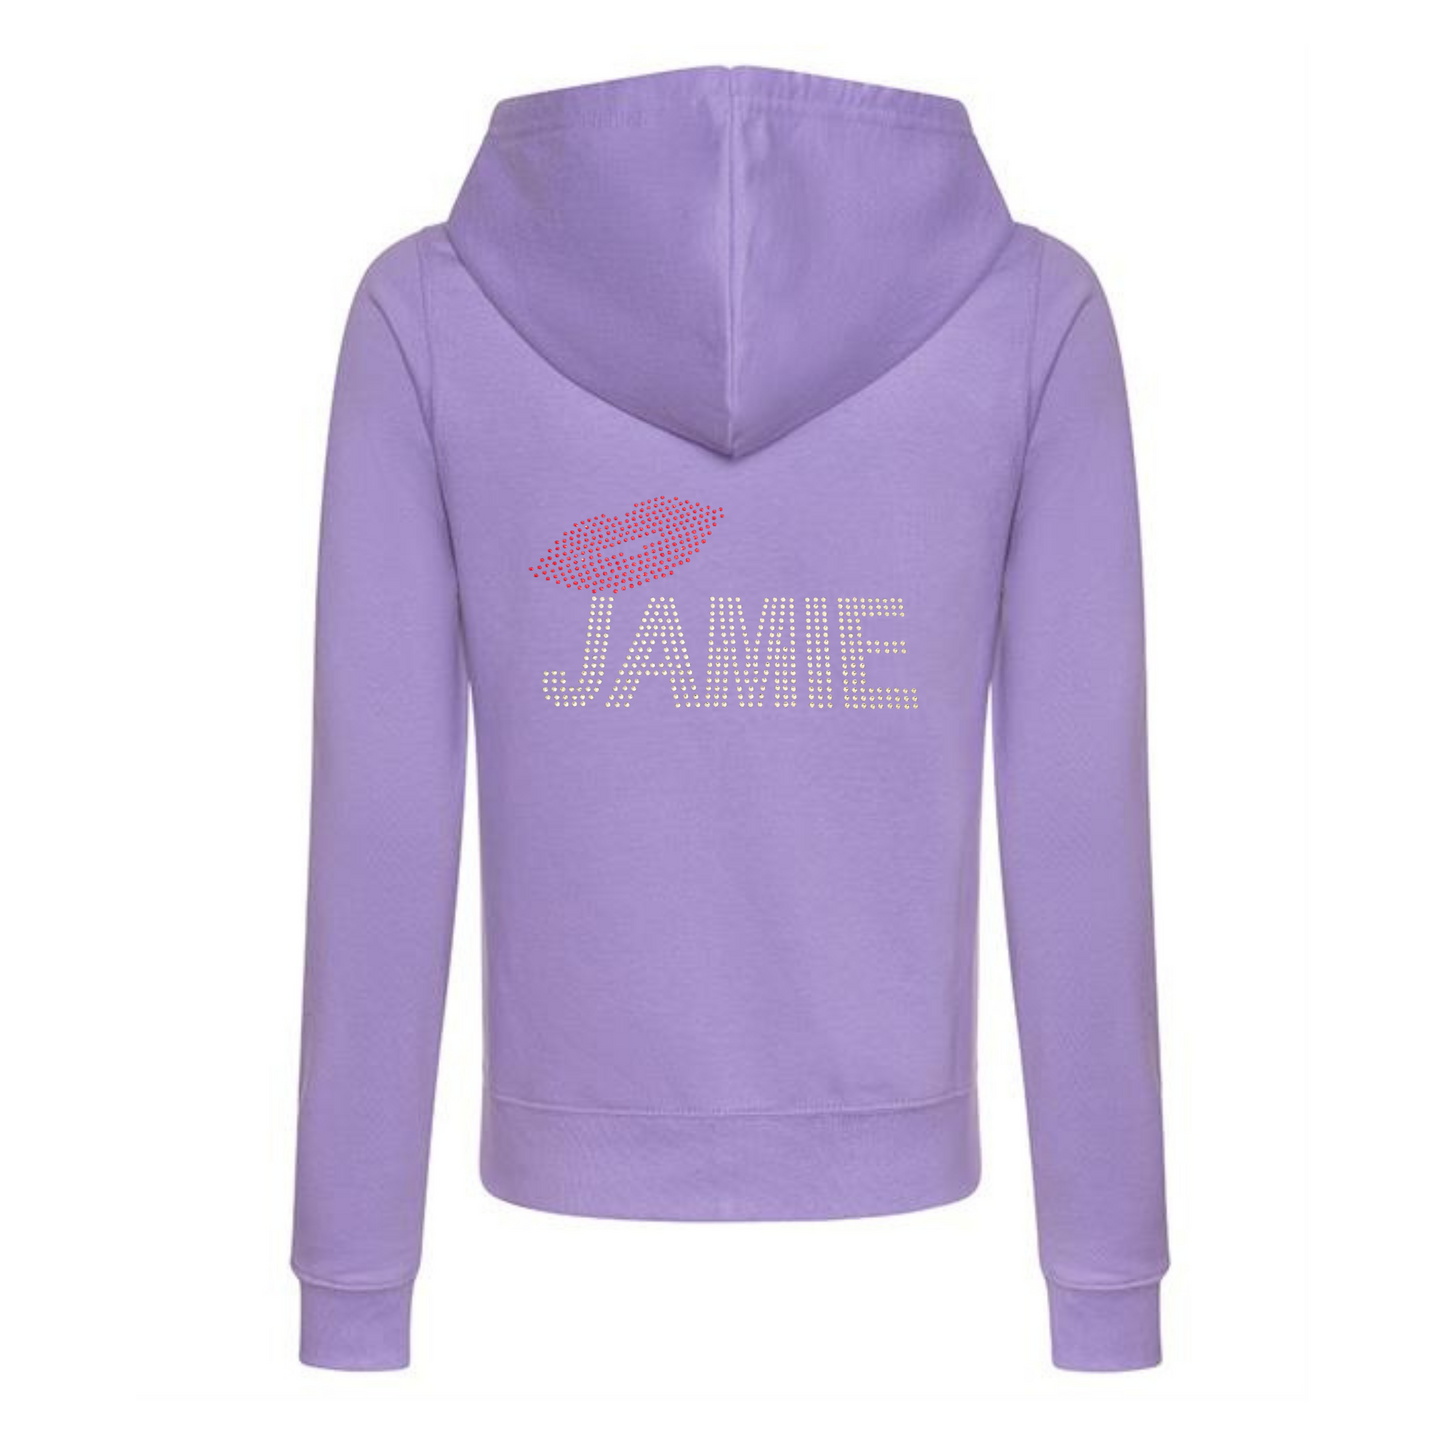 purple zip up hoodie with silver rhinestones detailing Jamie and red rhinestones lips, very sparkly